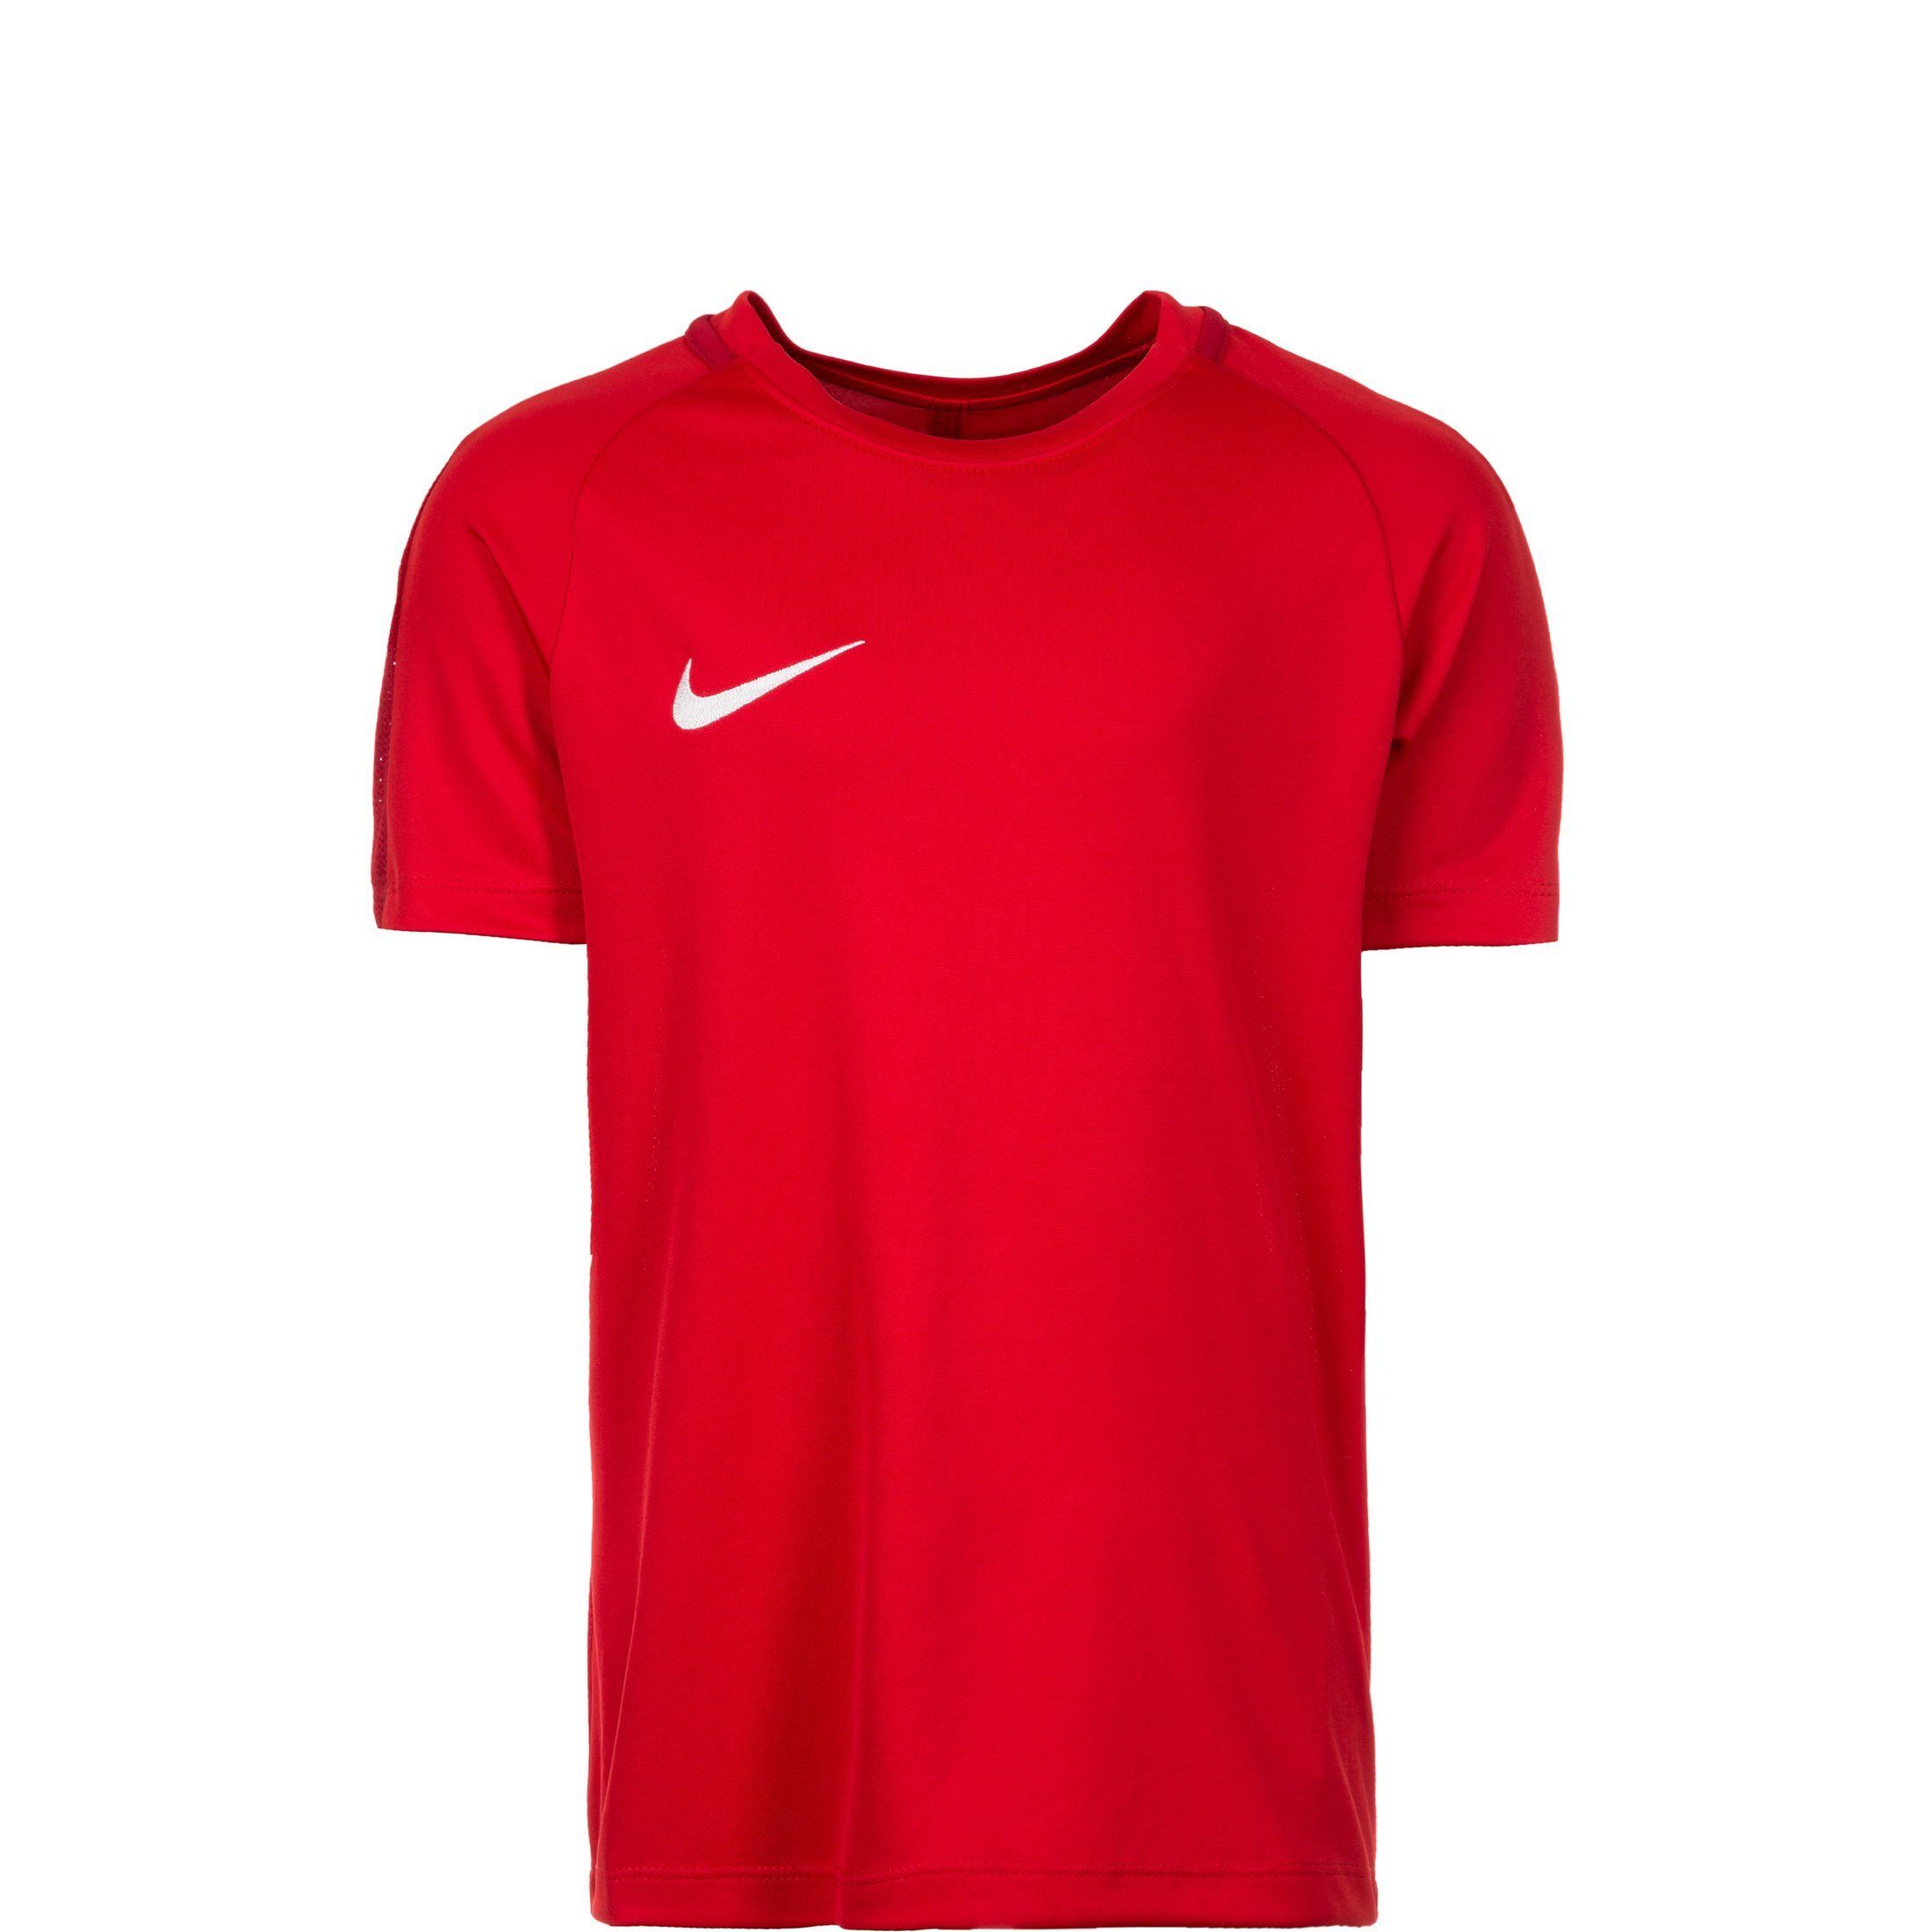 Nike Trainingsshirt »Dry Academy 18«, rot